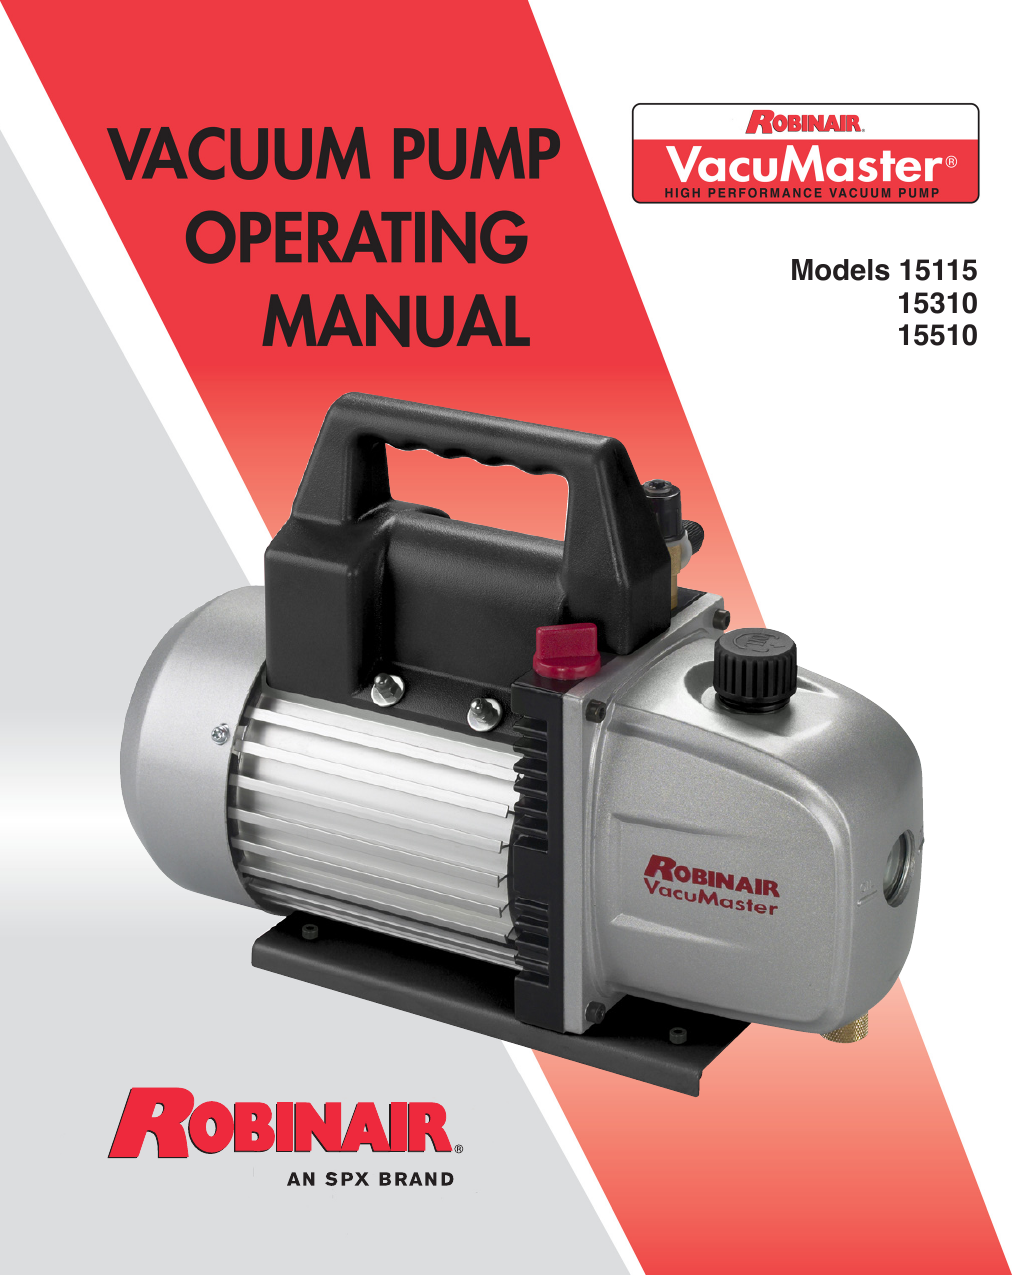 Robinair Vacumaster 15115 Users Manual